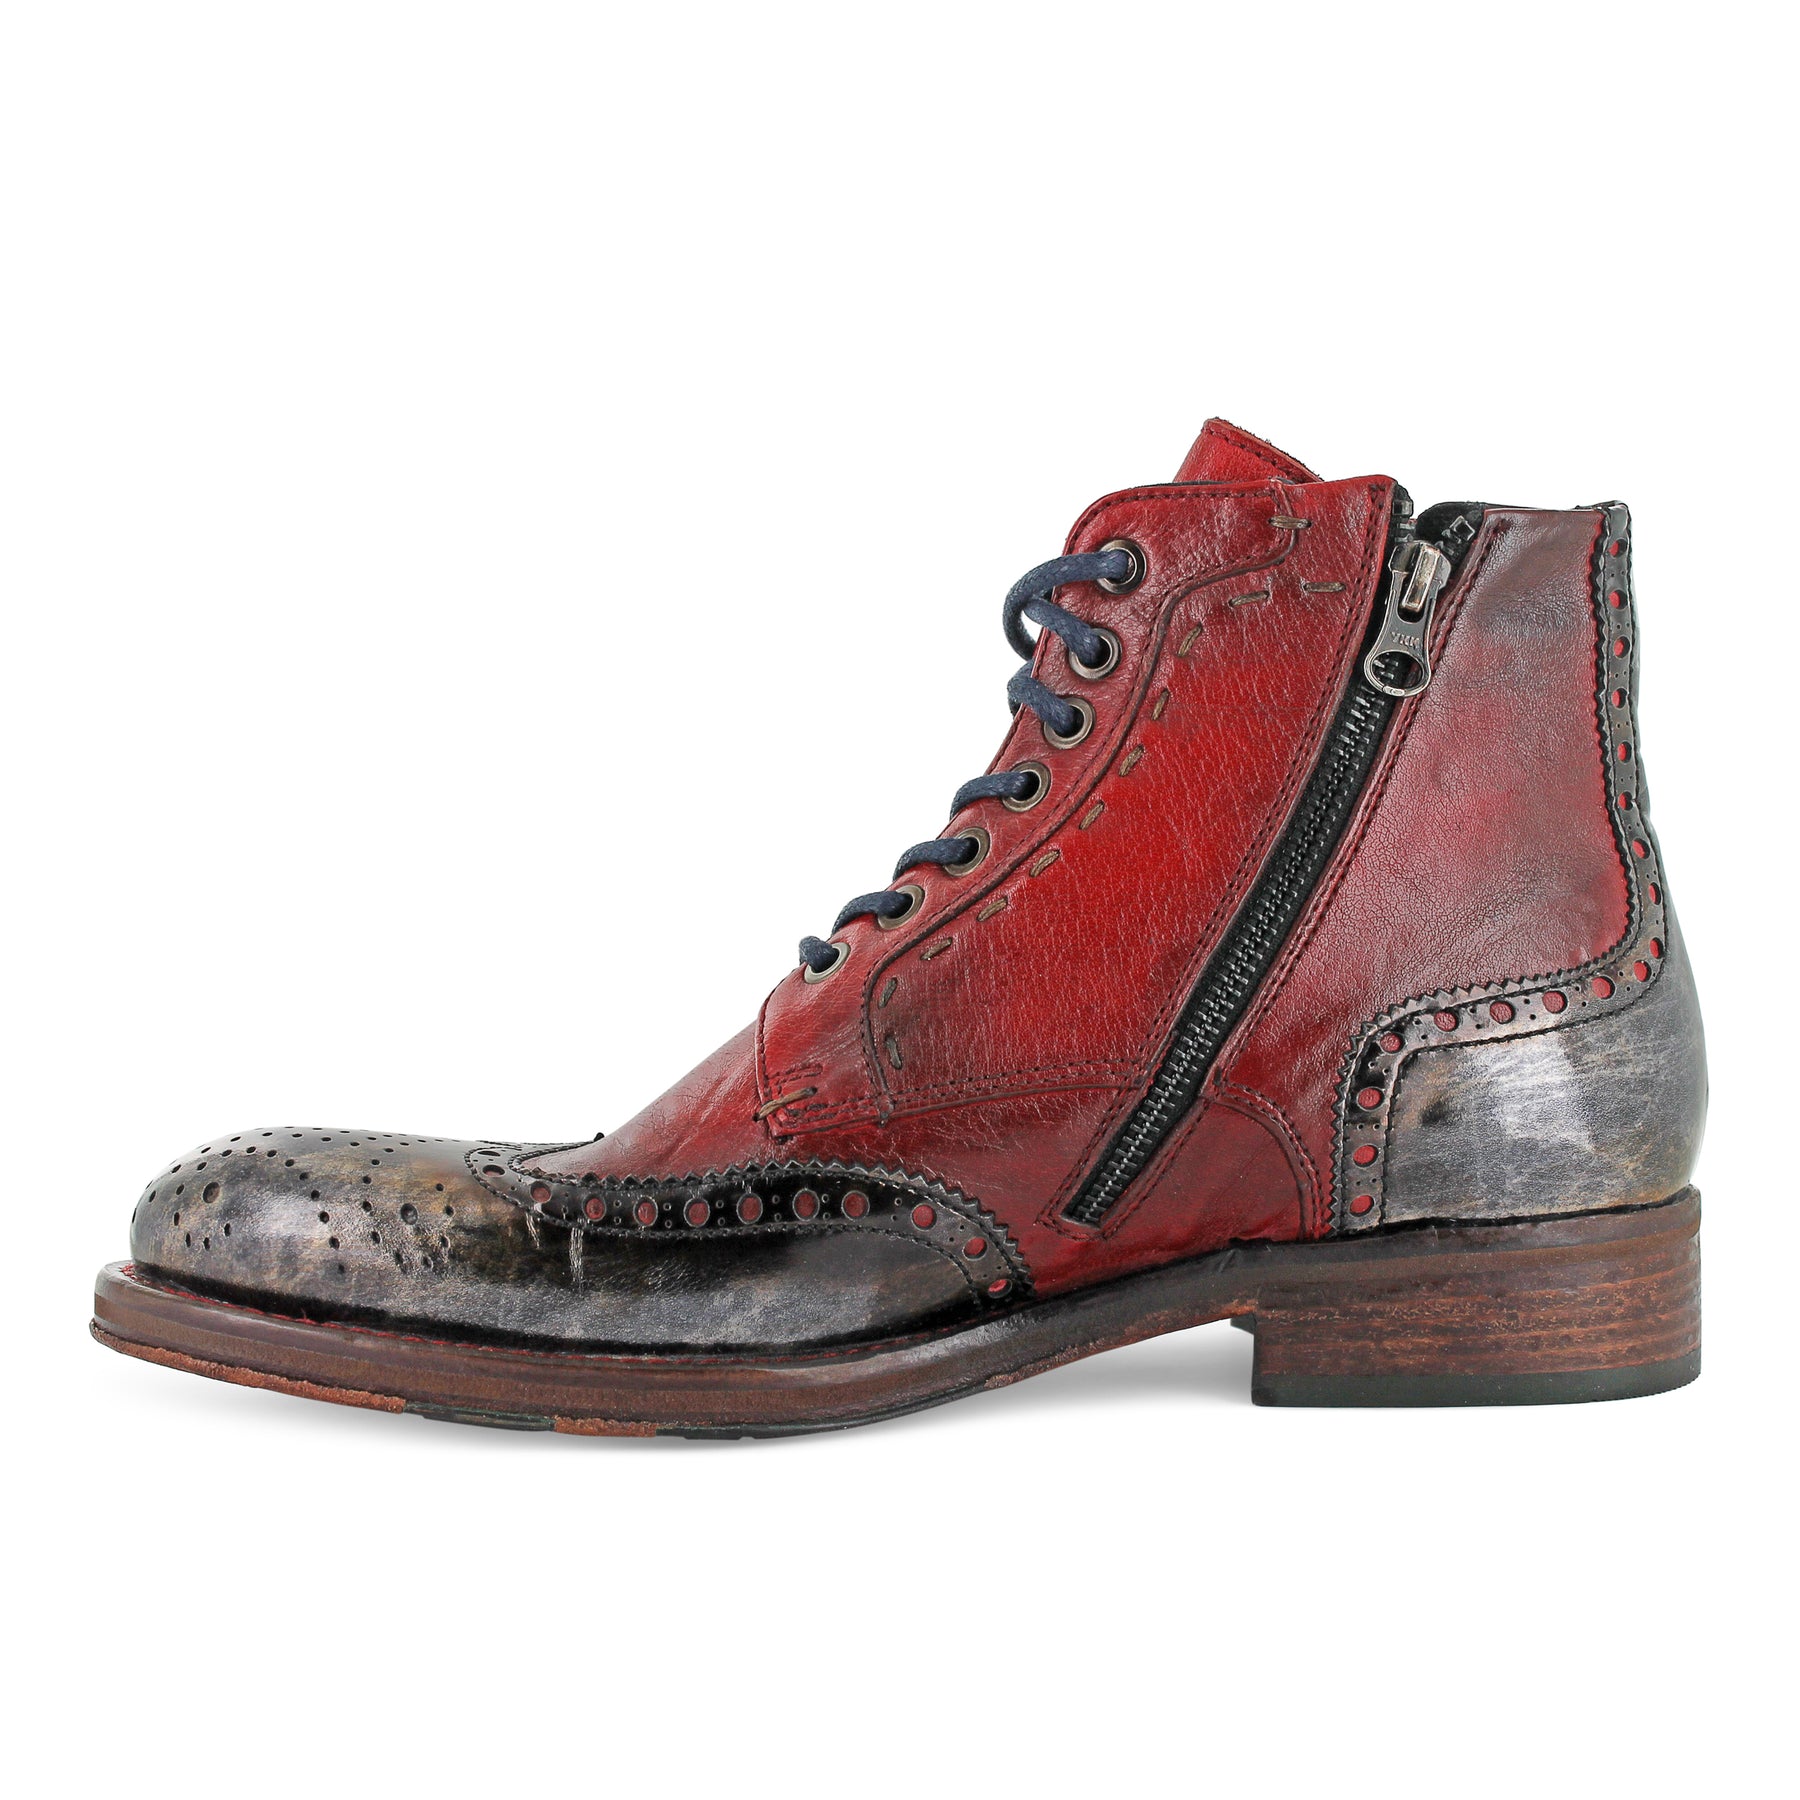 6320 - Red Brogue Boot With Metallic Toe Cap